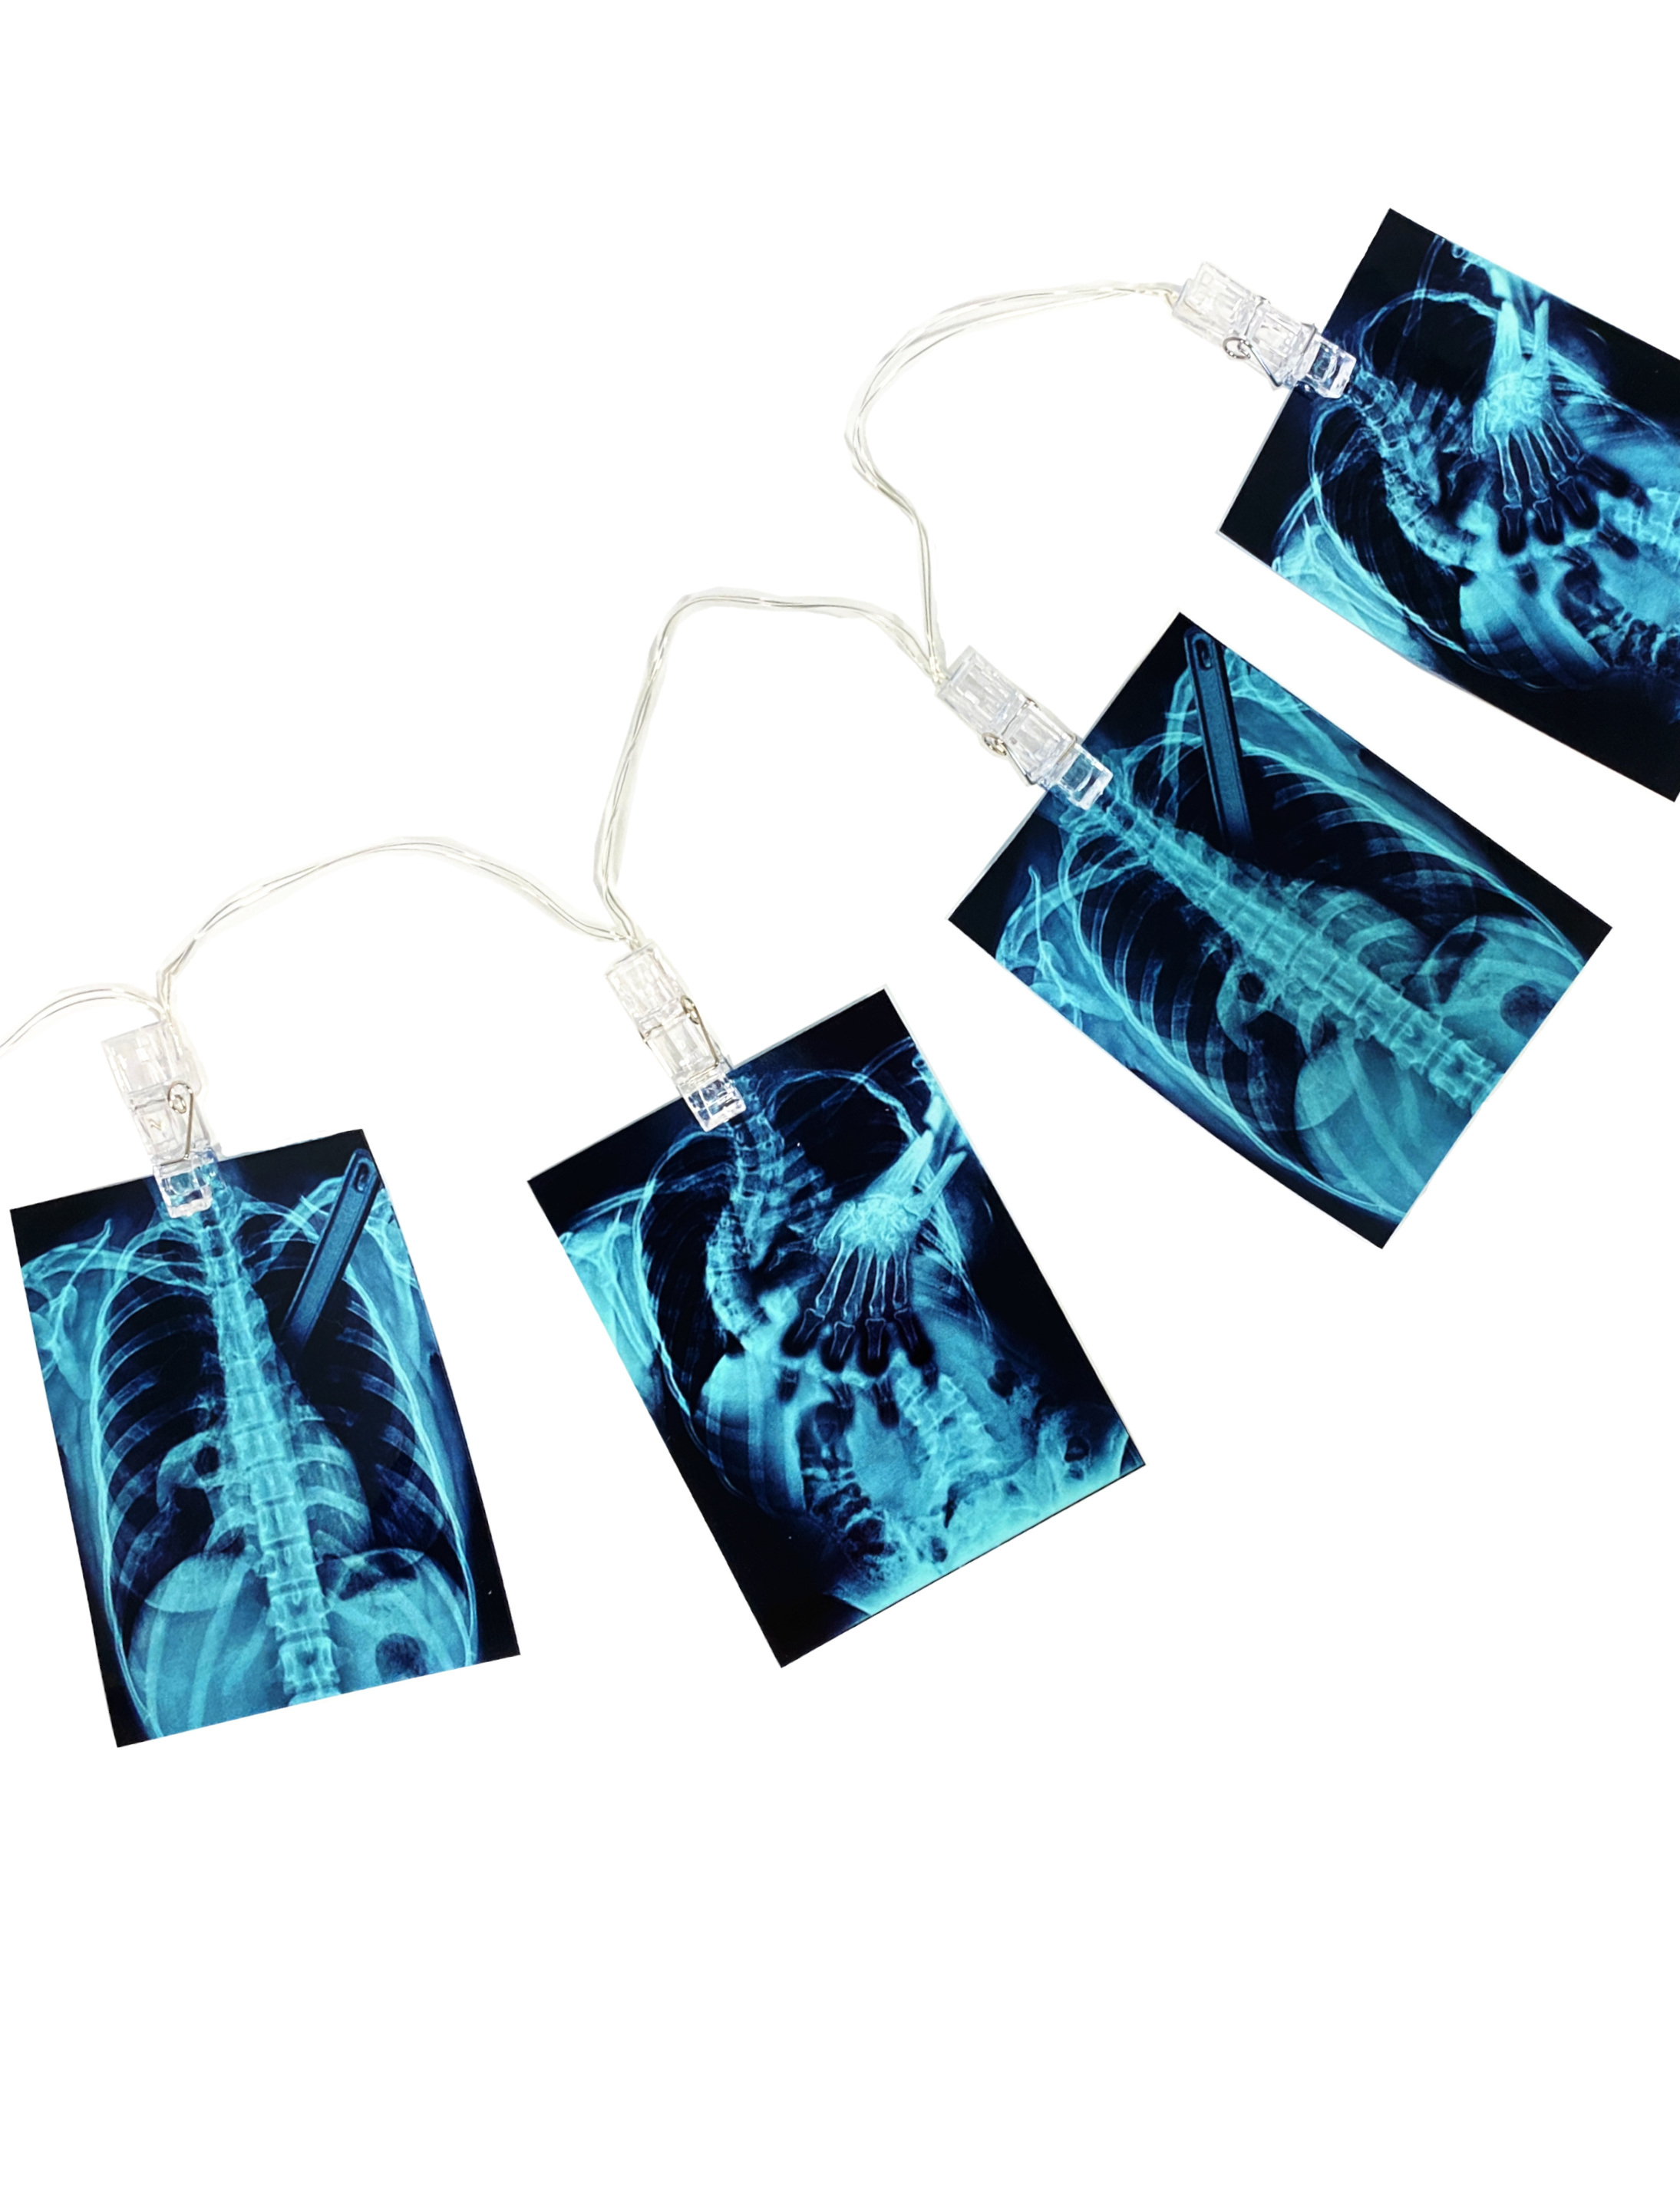 LED Girlande Röntgenbilder mit Skeletten